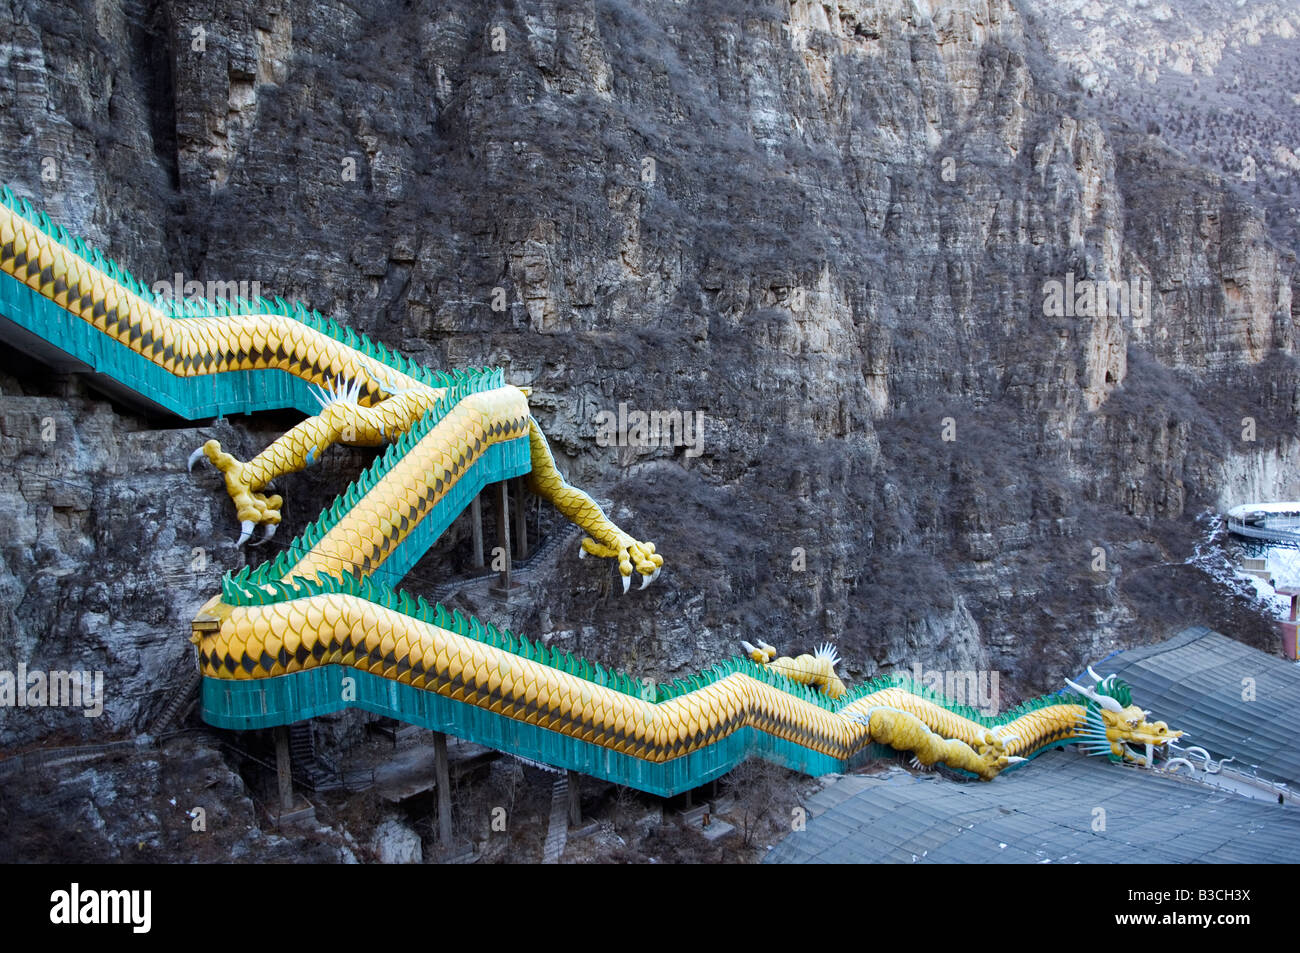 China, Beijing, Longqing Gorge Tourist Park. A dragon climbing down the mountainside. Stock Photo